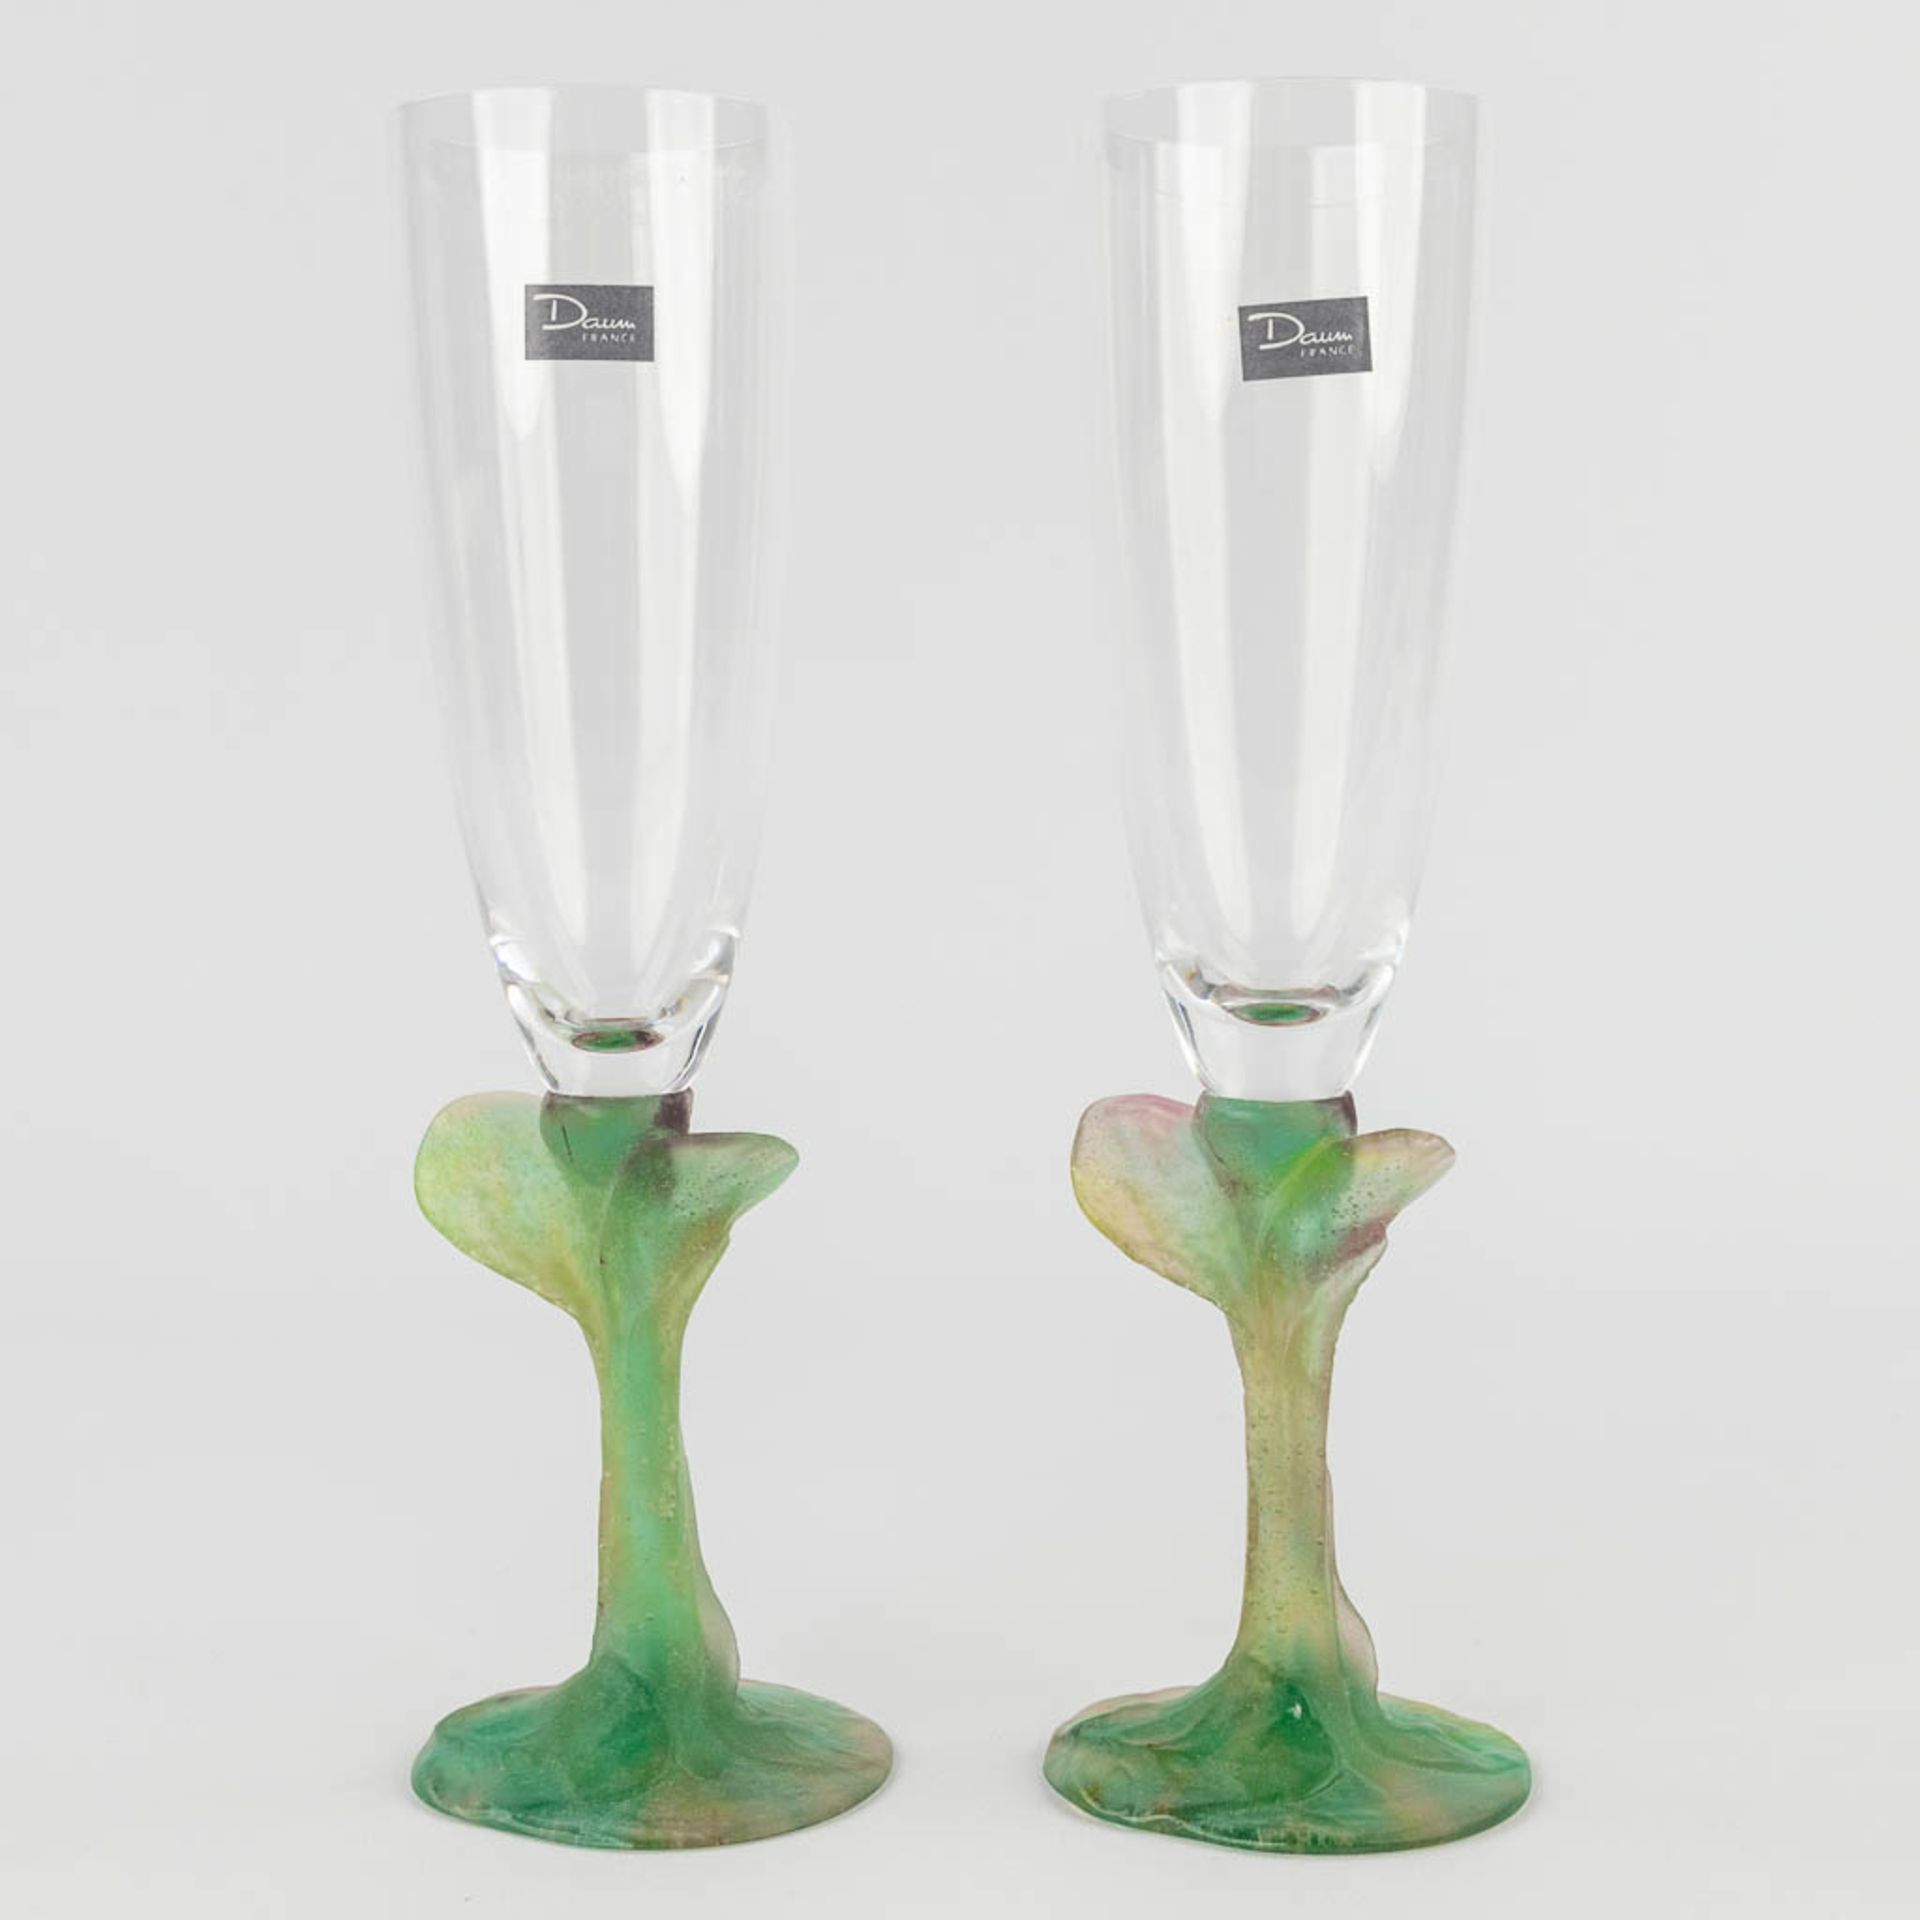 Daum France, 'Nature' a pair of champagne glasses in the original box. (H: 24 x D: 7 cm) - Bild 6 aus 13